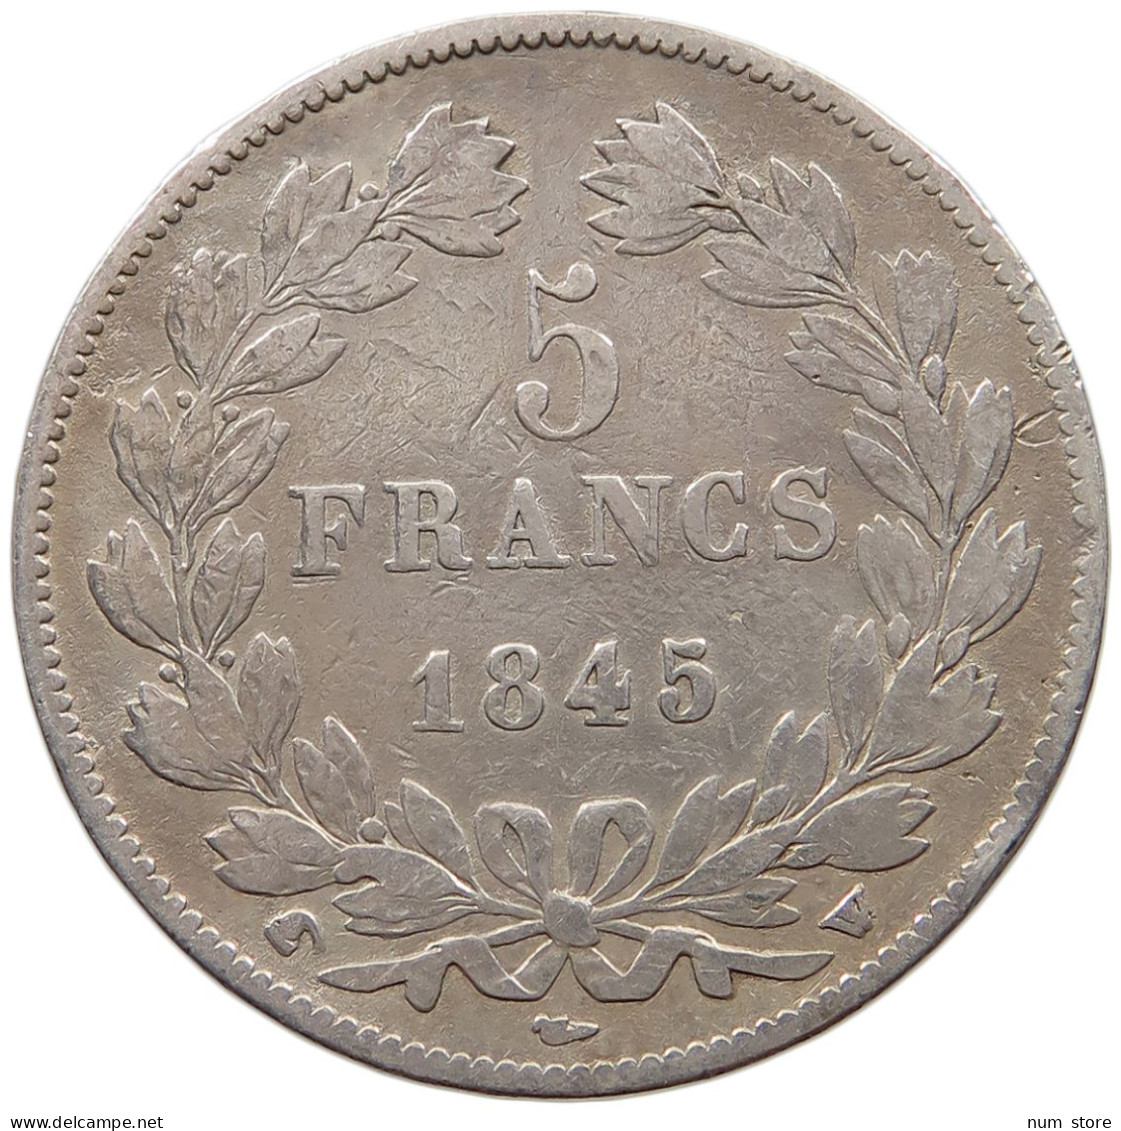 FRANCE 5 FRANCS 1845 W LOUIS PHILIPPE I. (1830-1848) #c058 0079 - 5 Francs